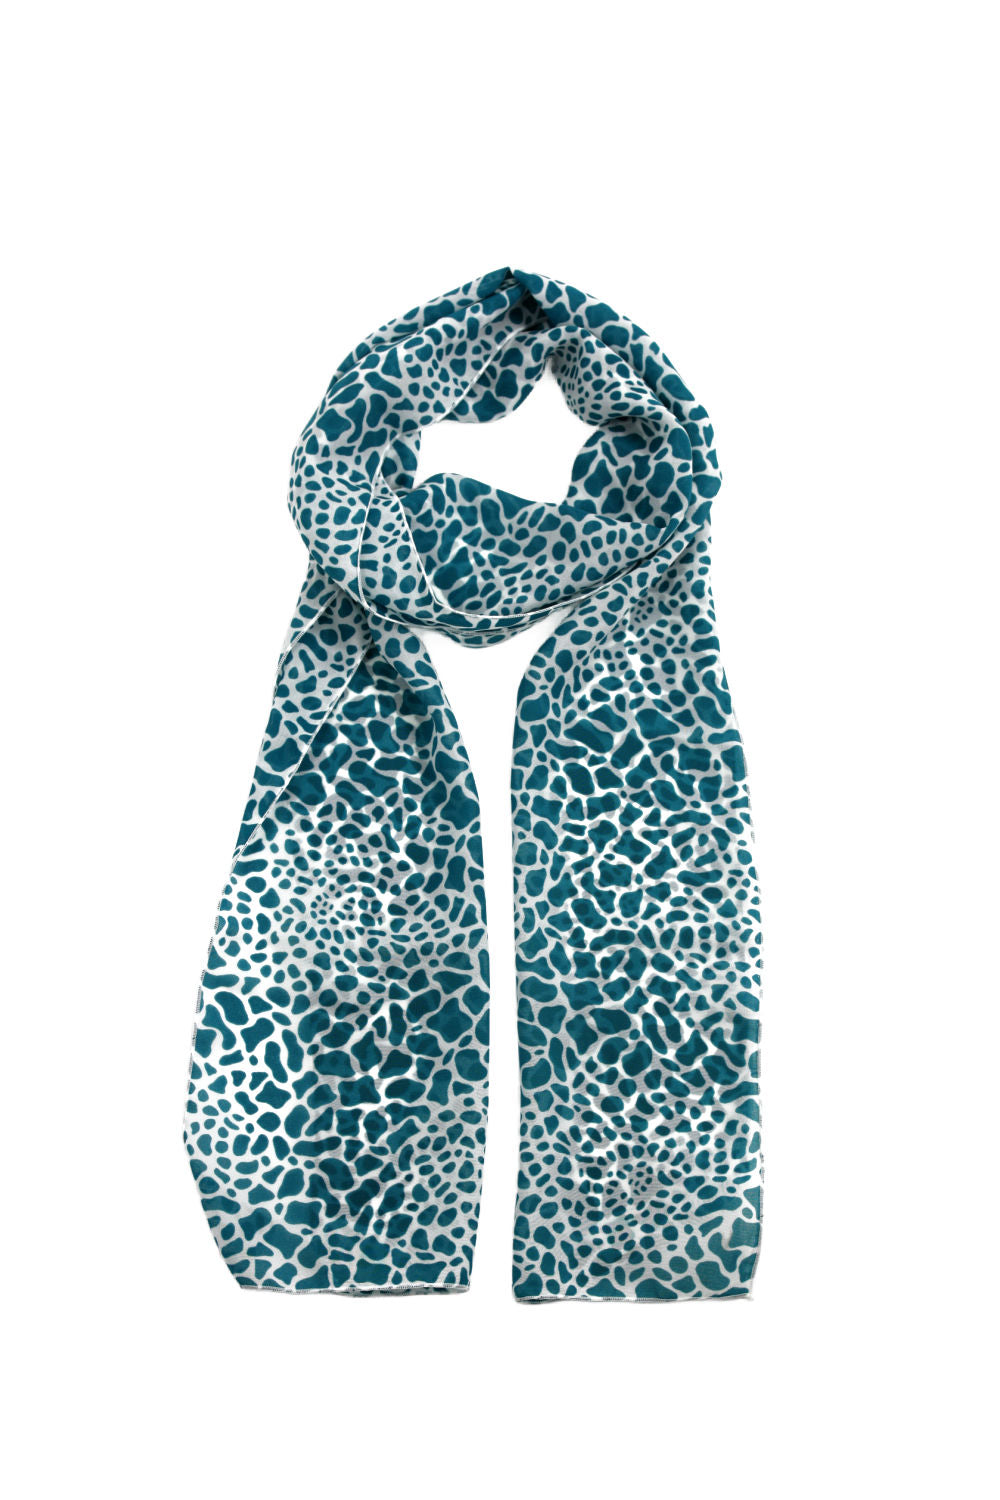 ladies-leopard-print-scarf-turquoise-white